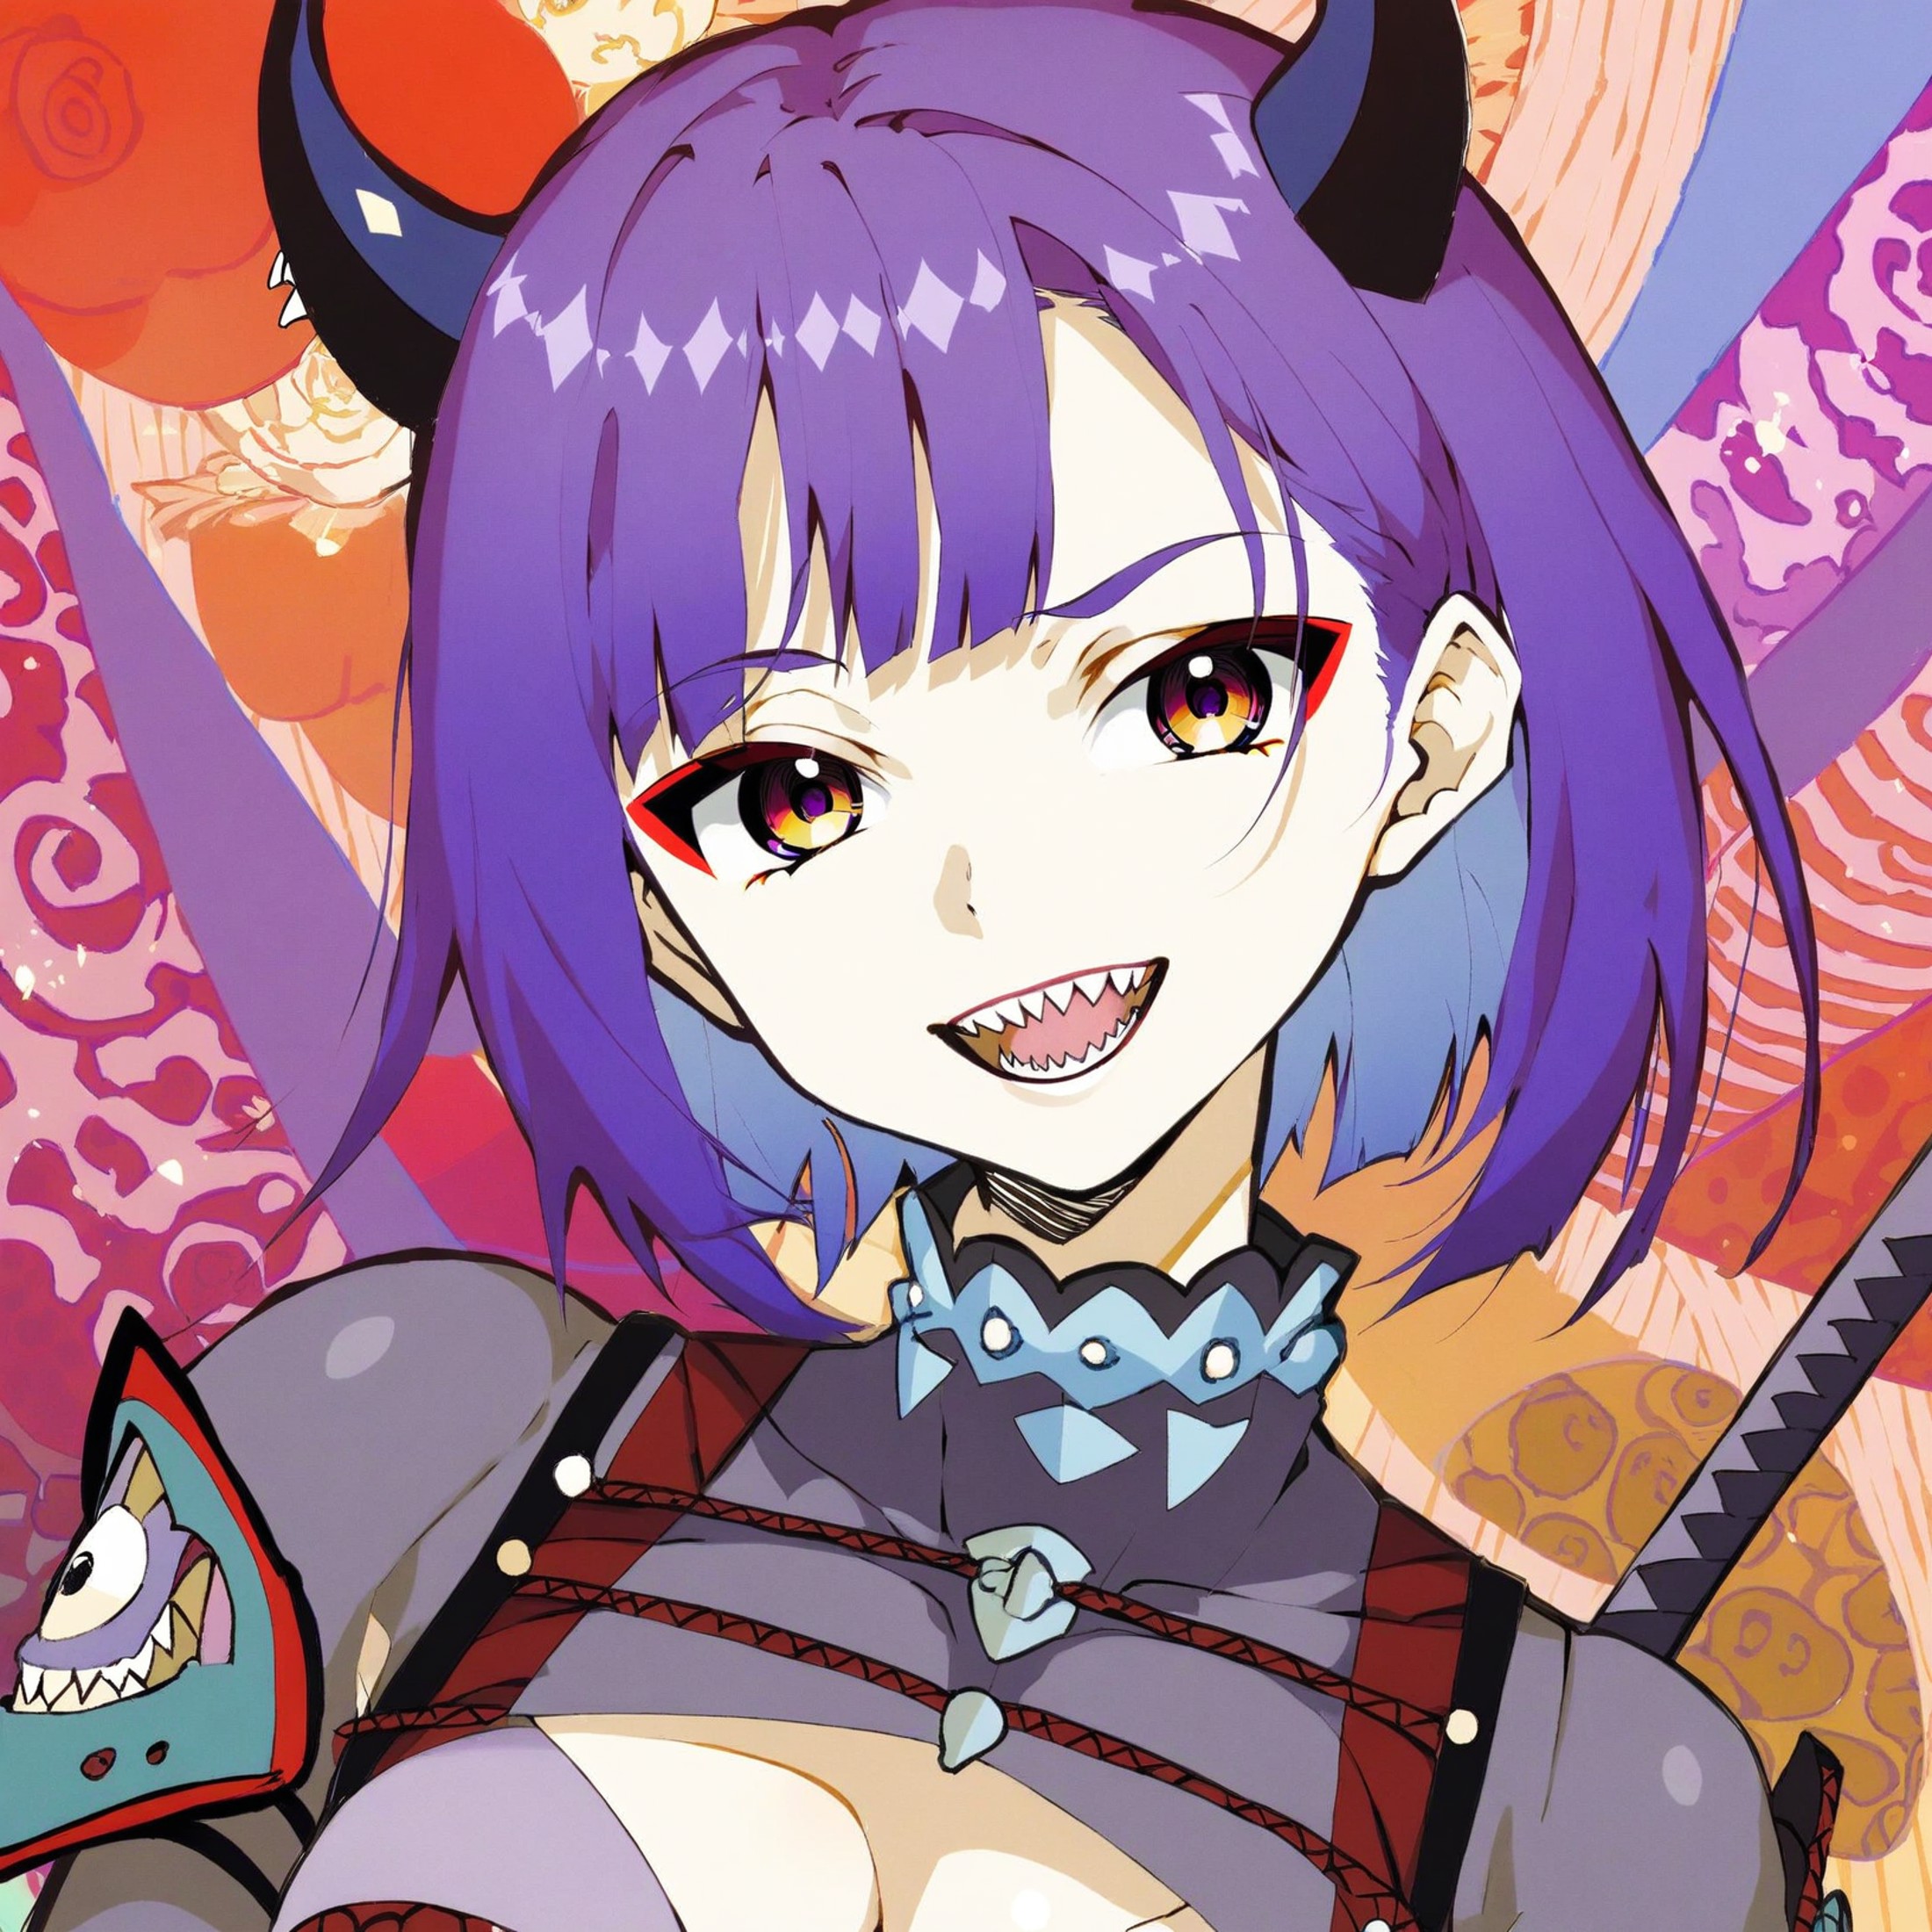 <lora:Atsushi_Ohkubo_Style-000007:1>, by Atsushi Ohkubo, a demon girl, psychedelic hell background, sharp teeth smile, sho...